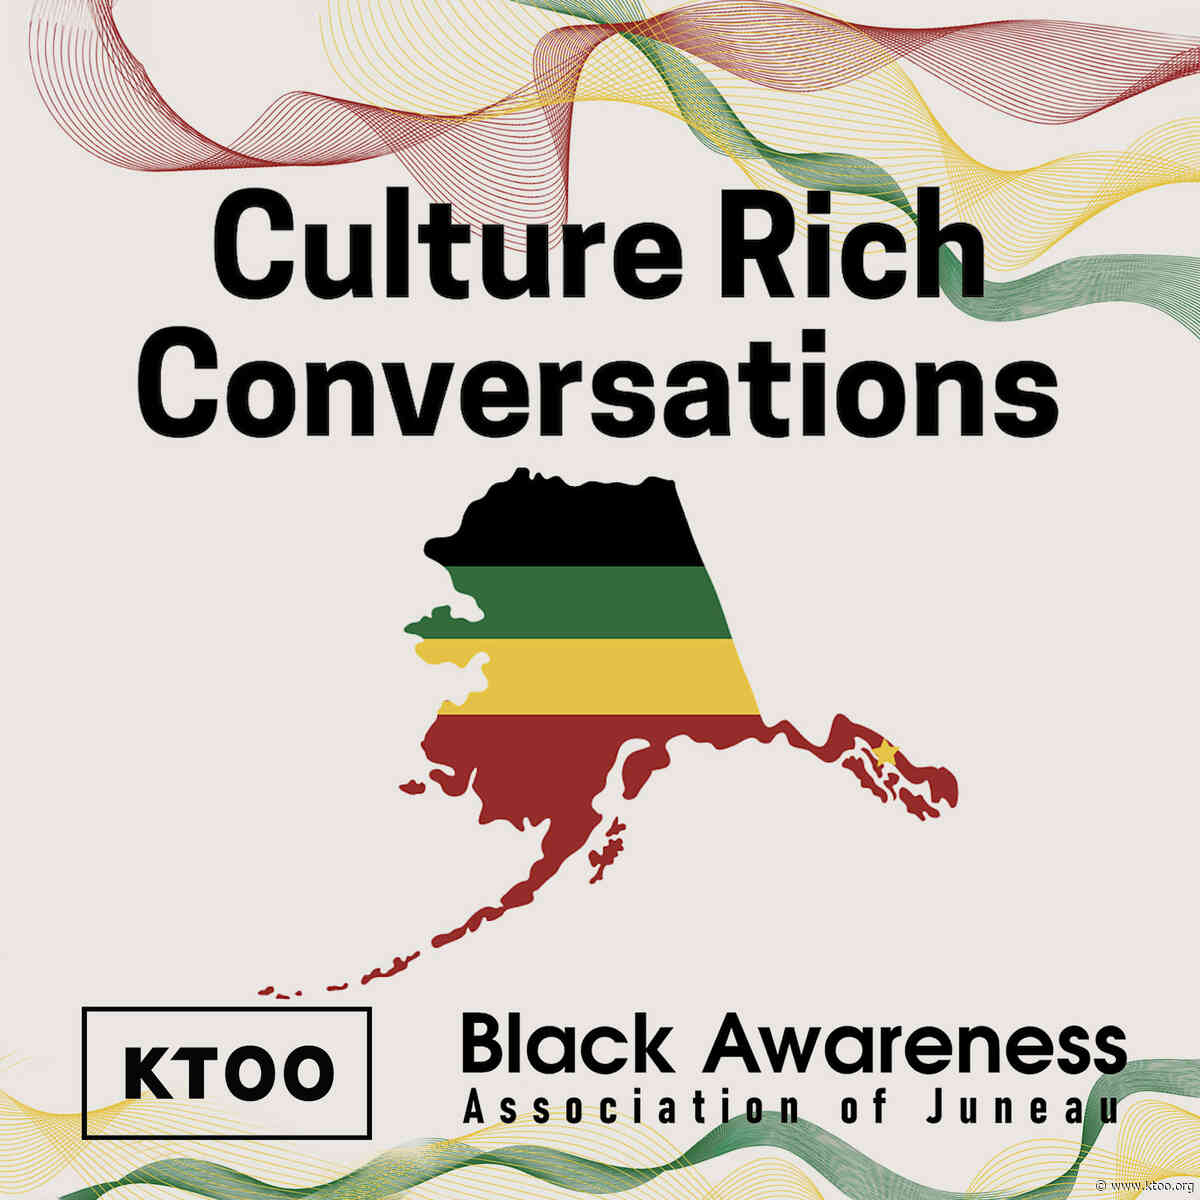 Culture Rich Conversations: Influential Black women in Alaska